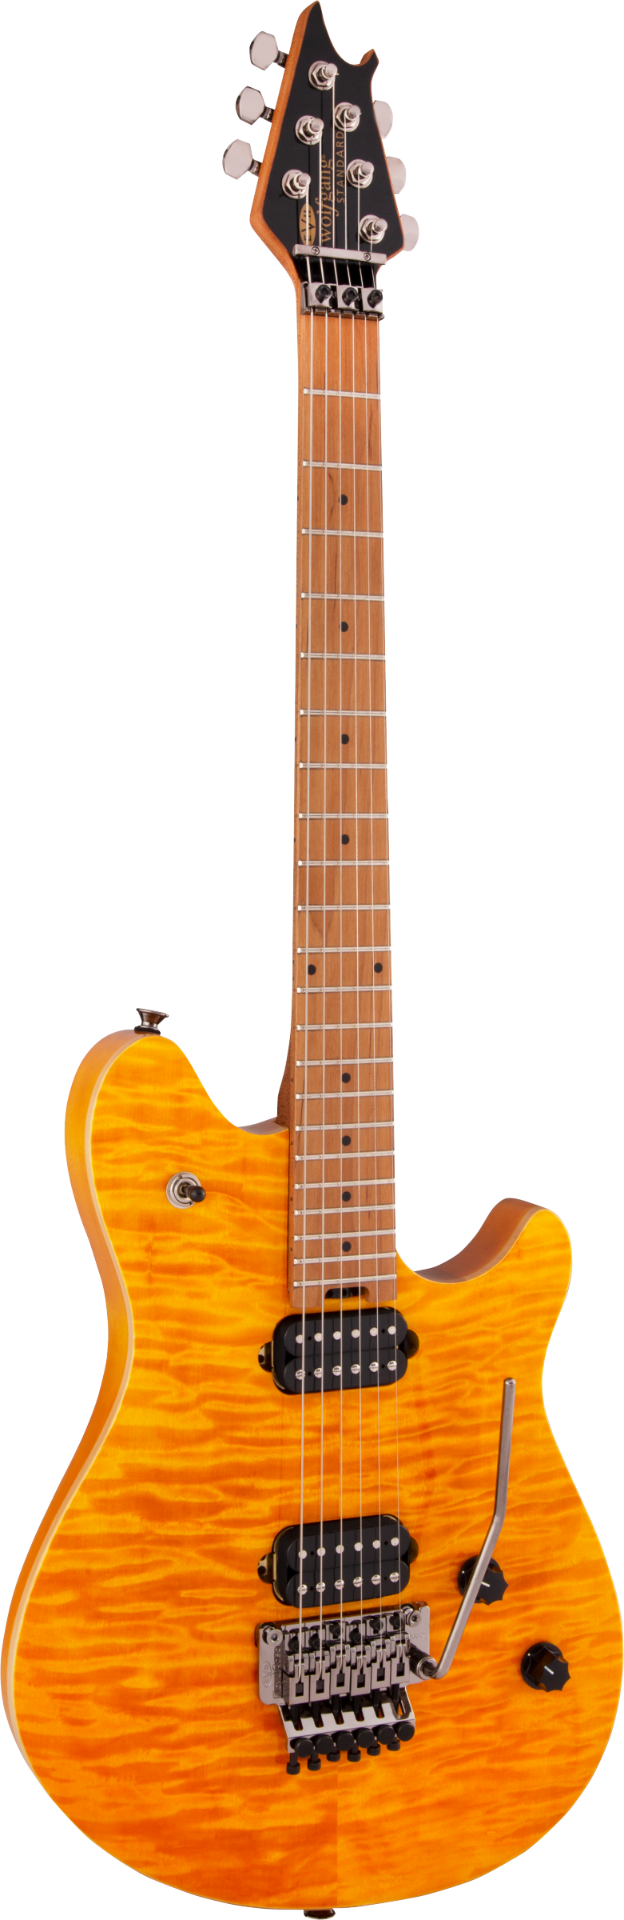 EVH Wolfgang® WG Standard QM Electric Guitar, Transparent Amber